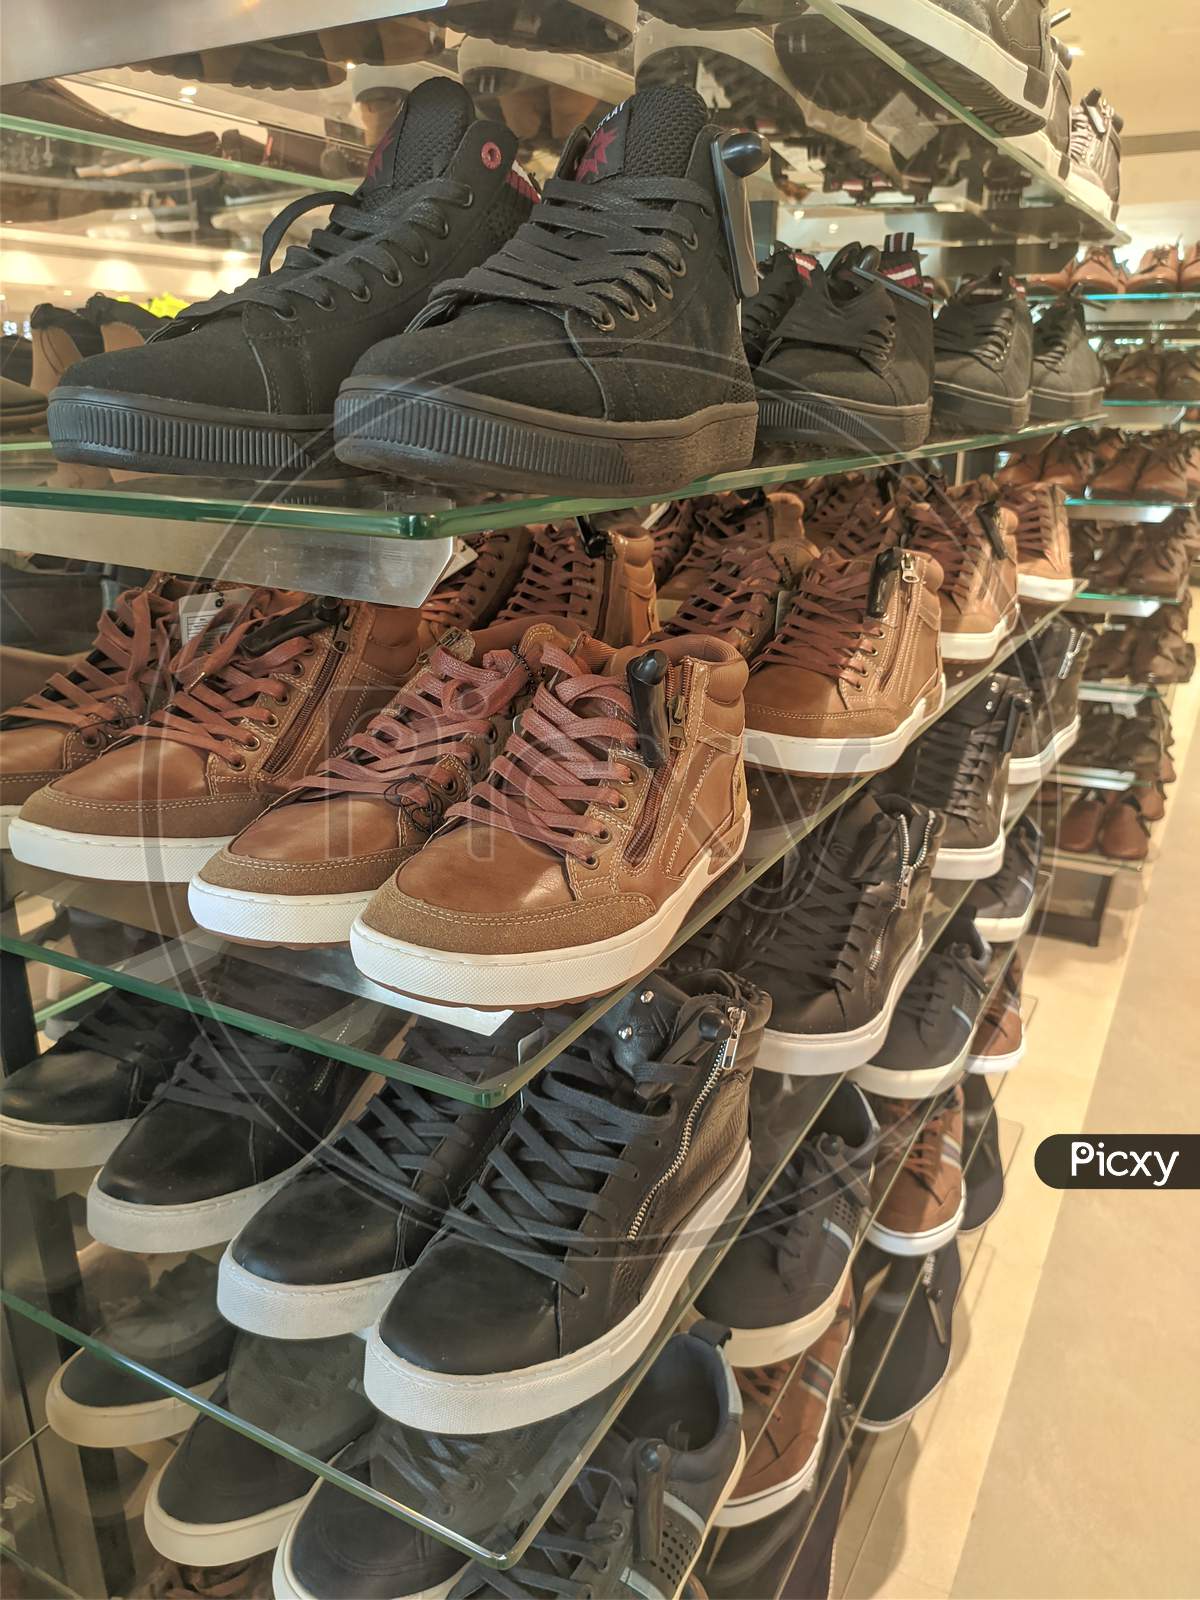 Shoe shopping in Forum mall